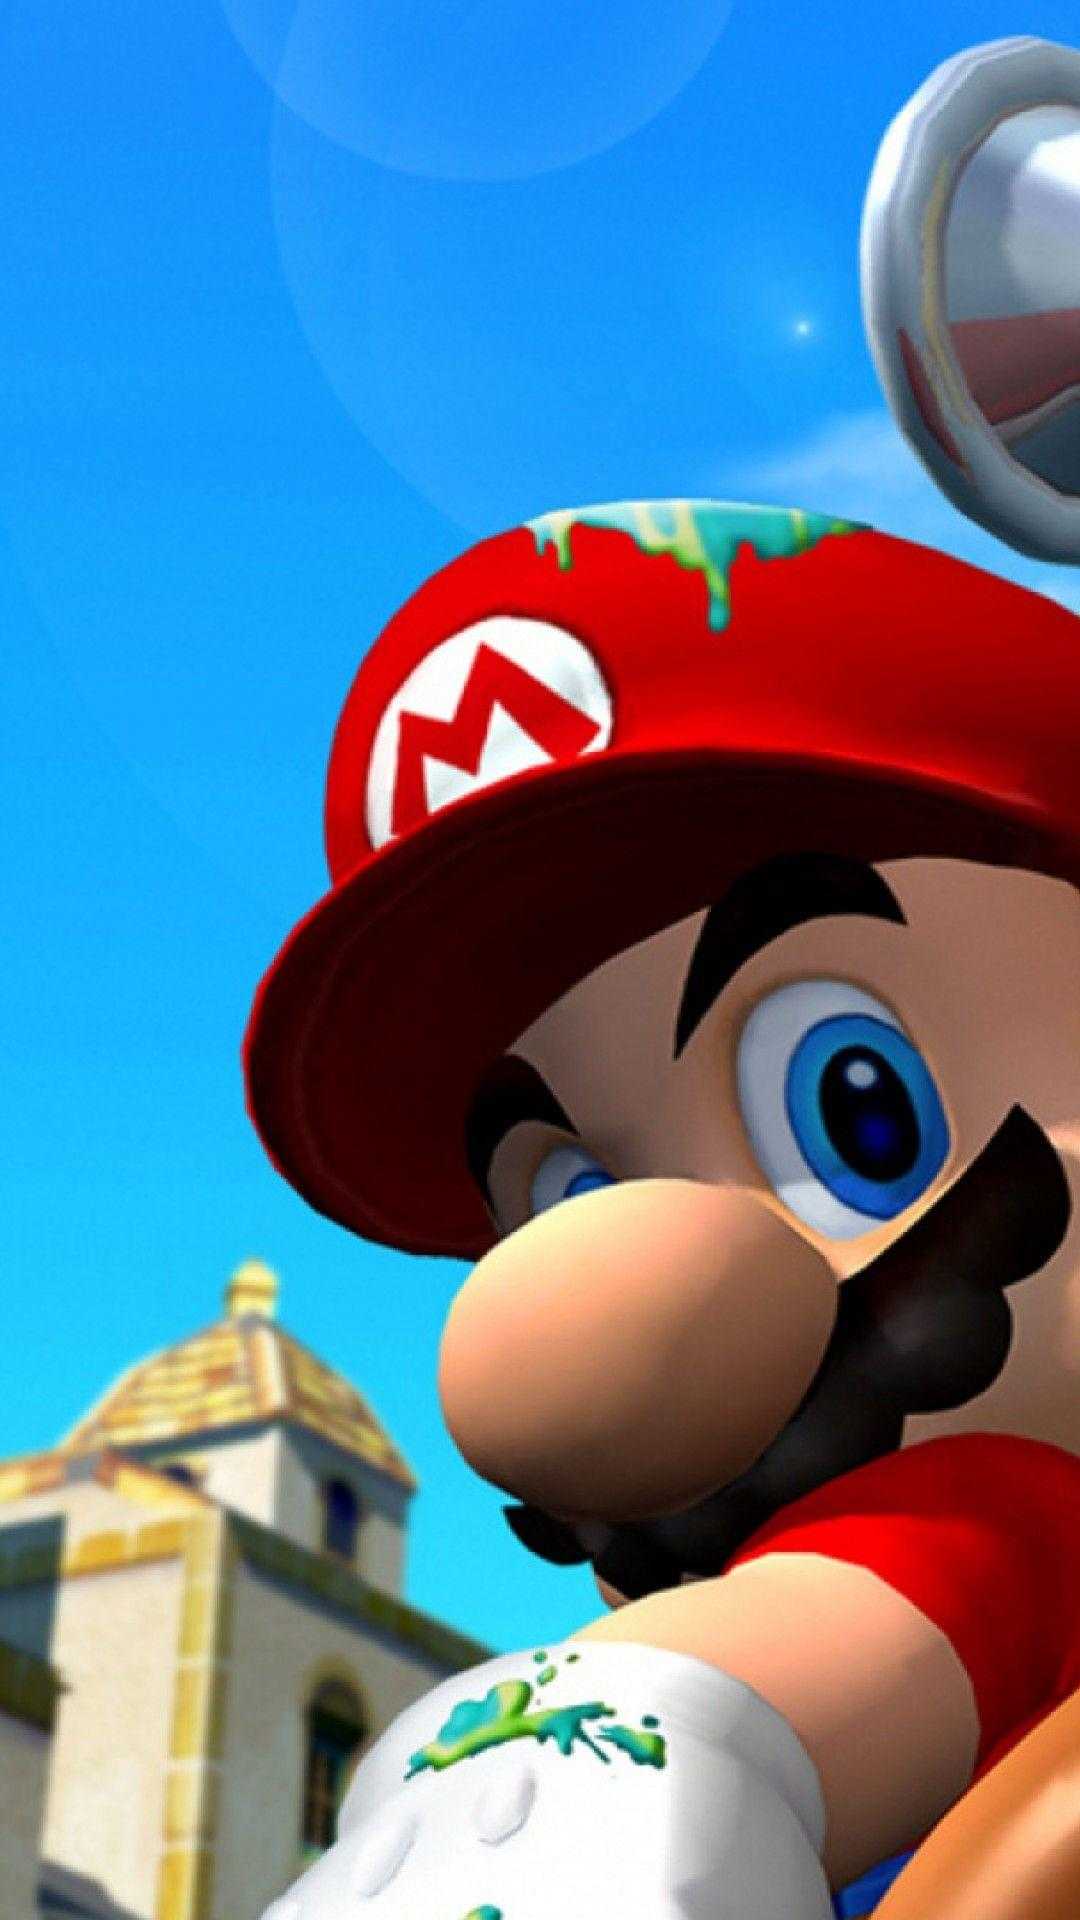 Mario Iphone Wallpapers